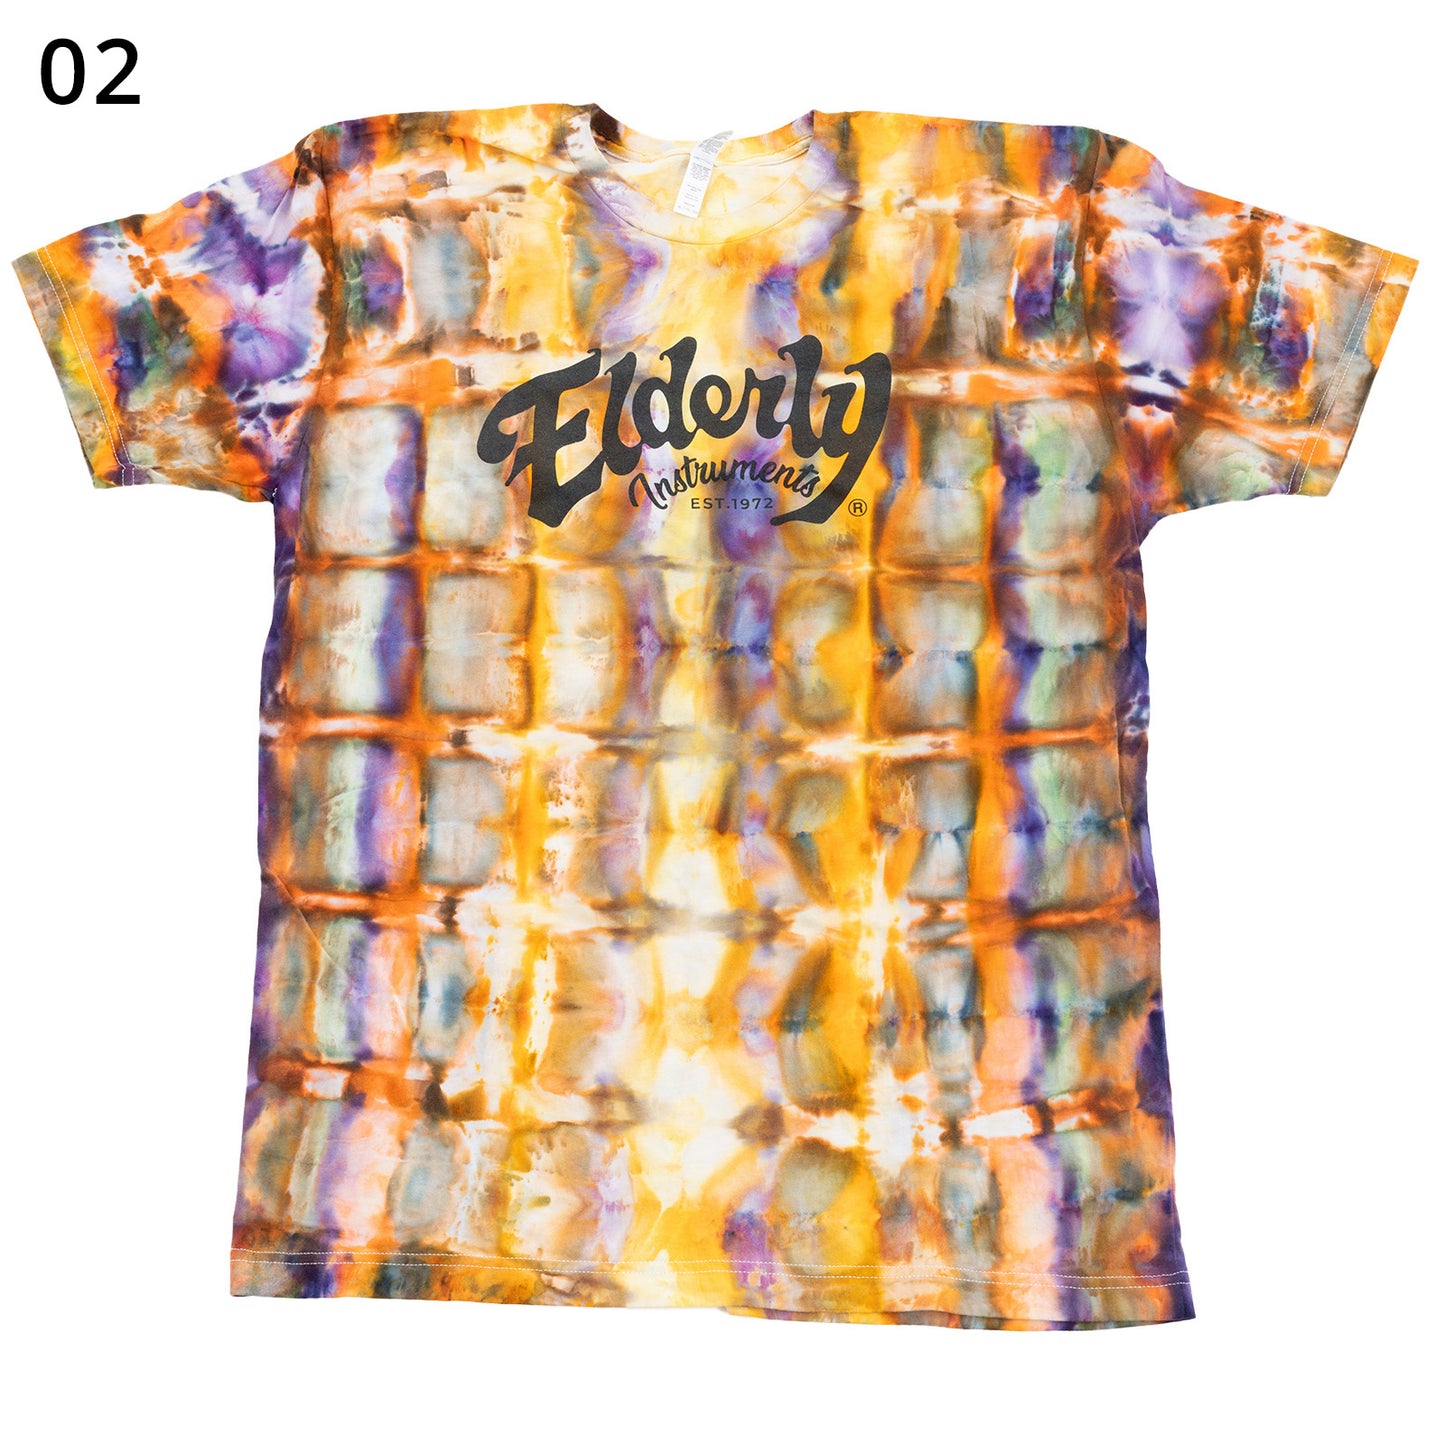 Elderly Instruments Tie-Dyed Logo Shirt 02